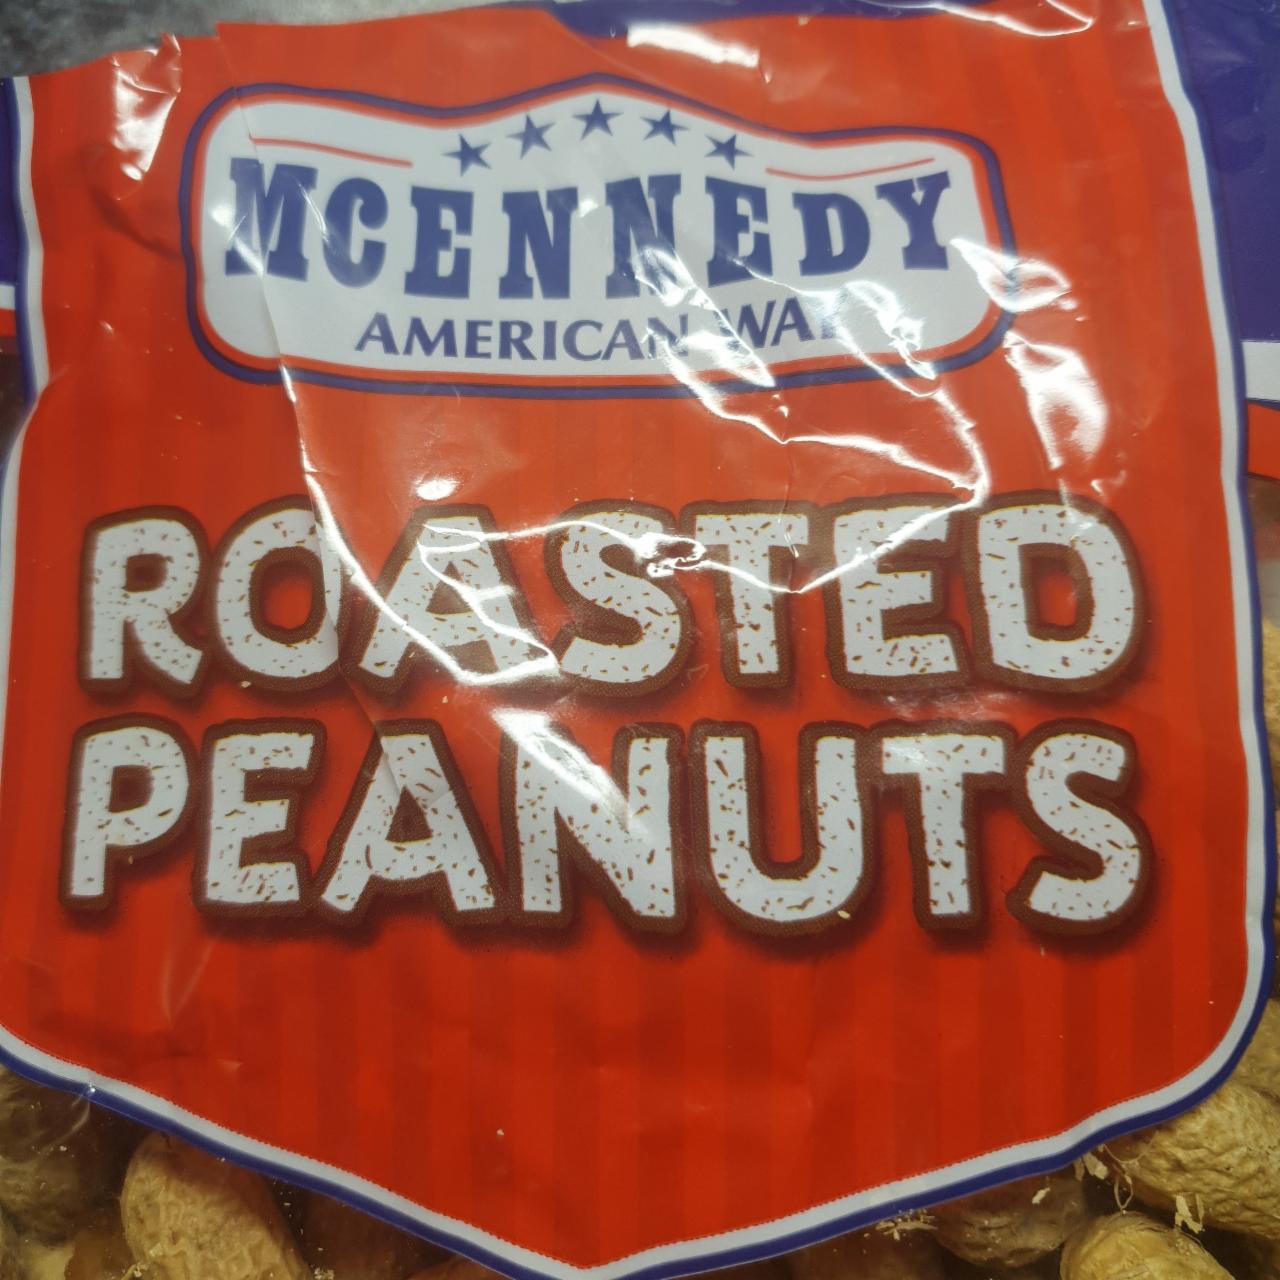 Fotografie - Roasted Peanuts McEnnedy American Way